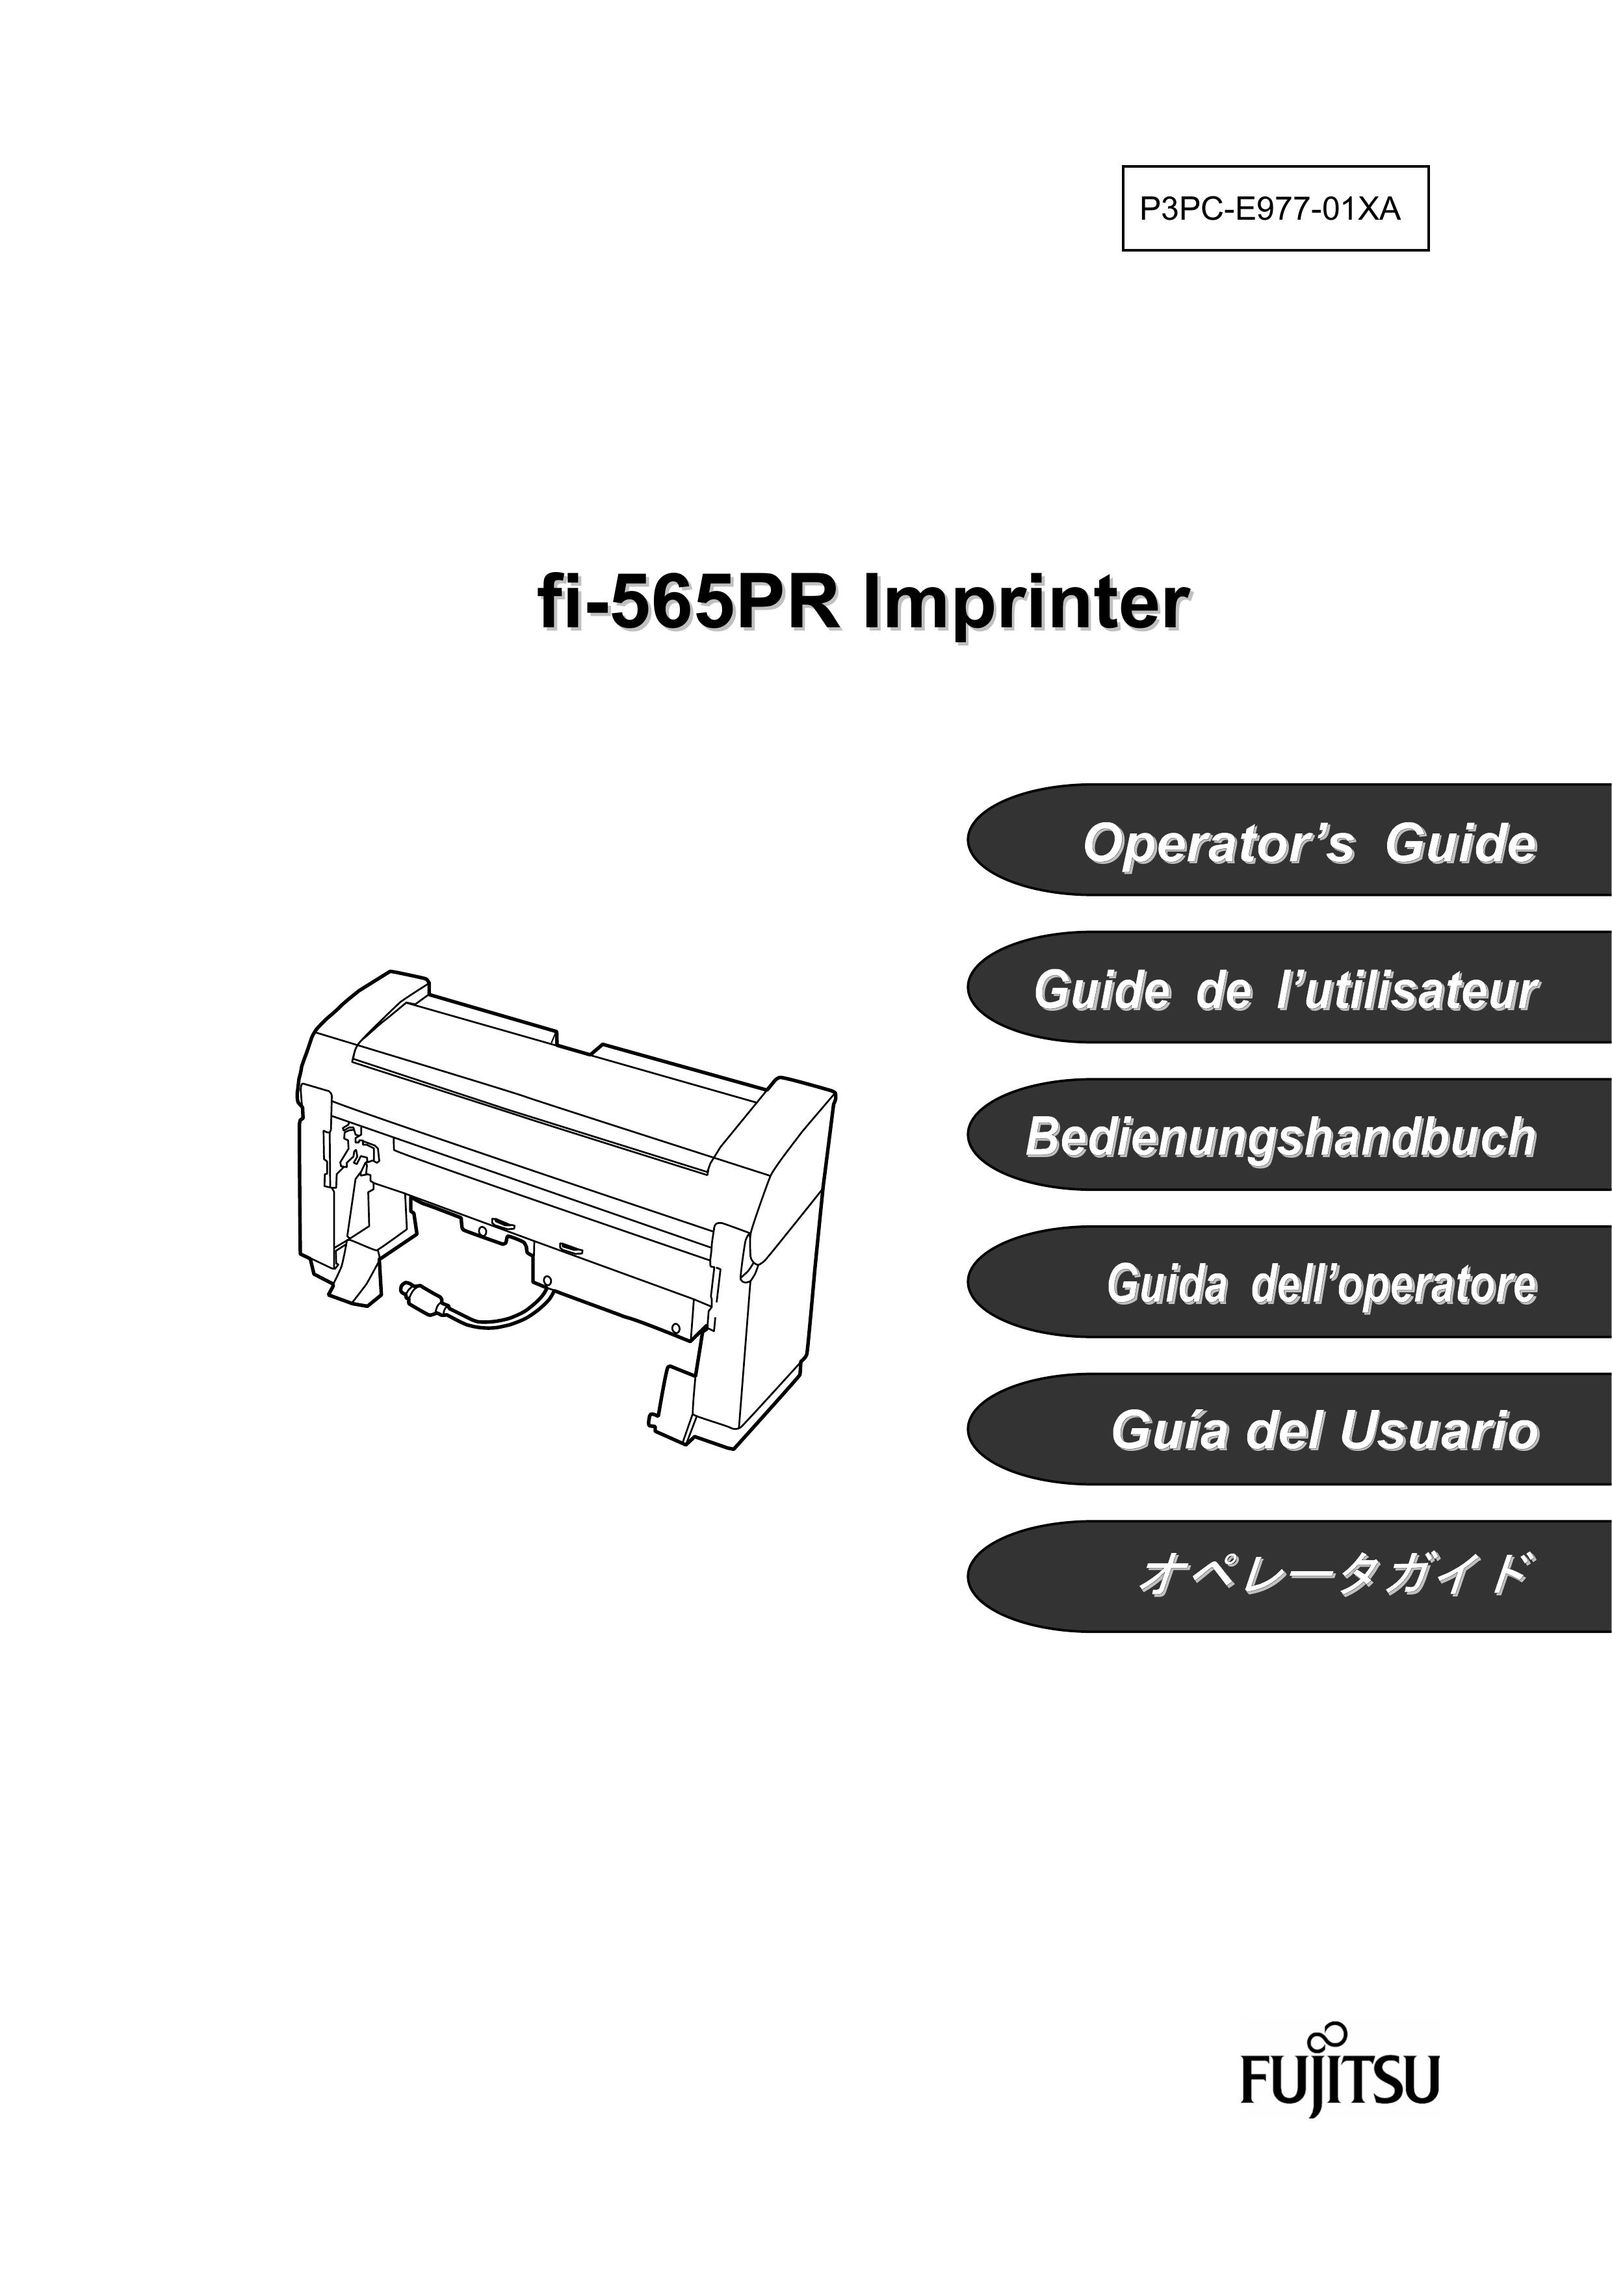 Dell fi-565PR Scanner User Manual